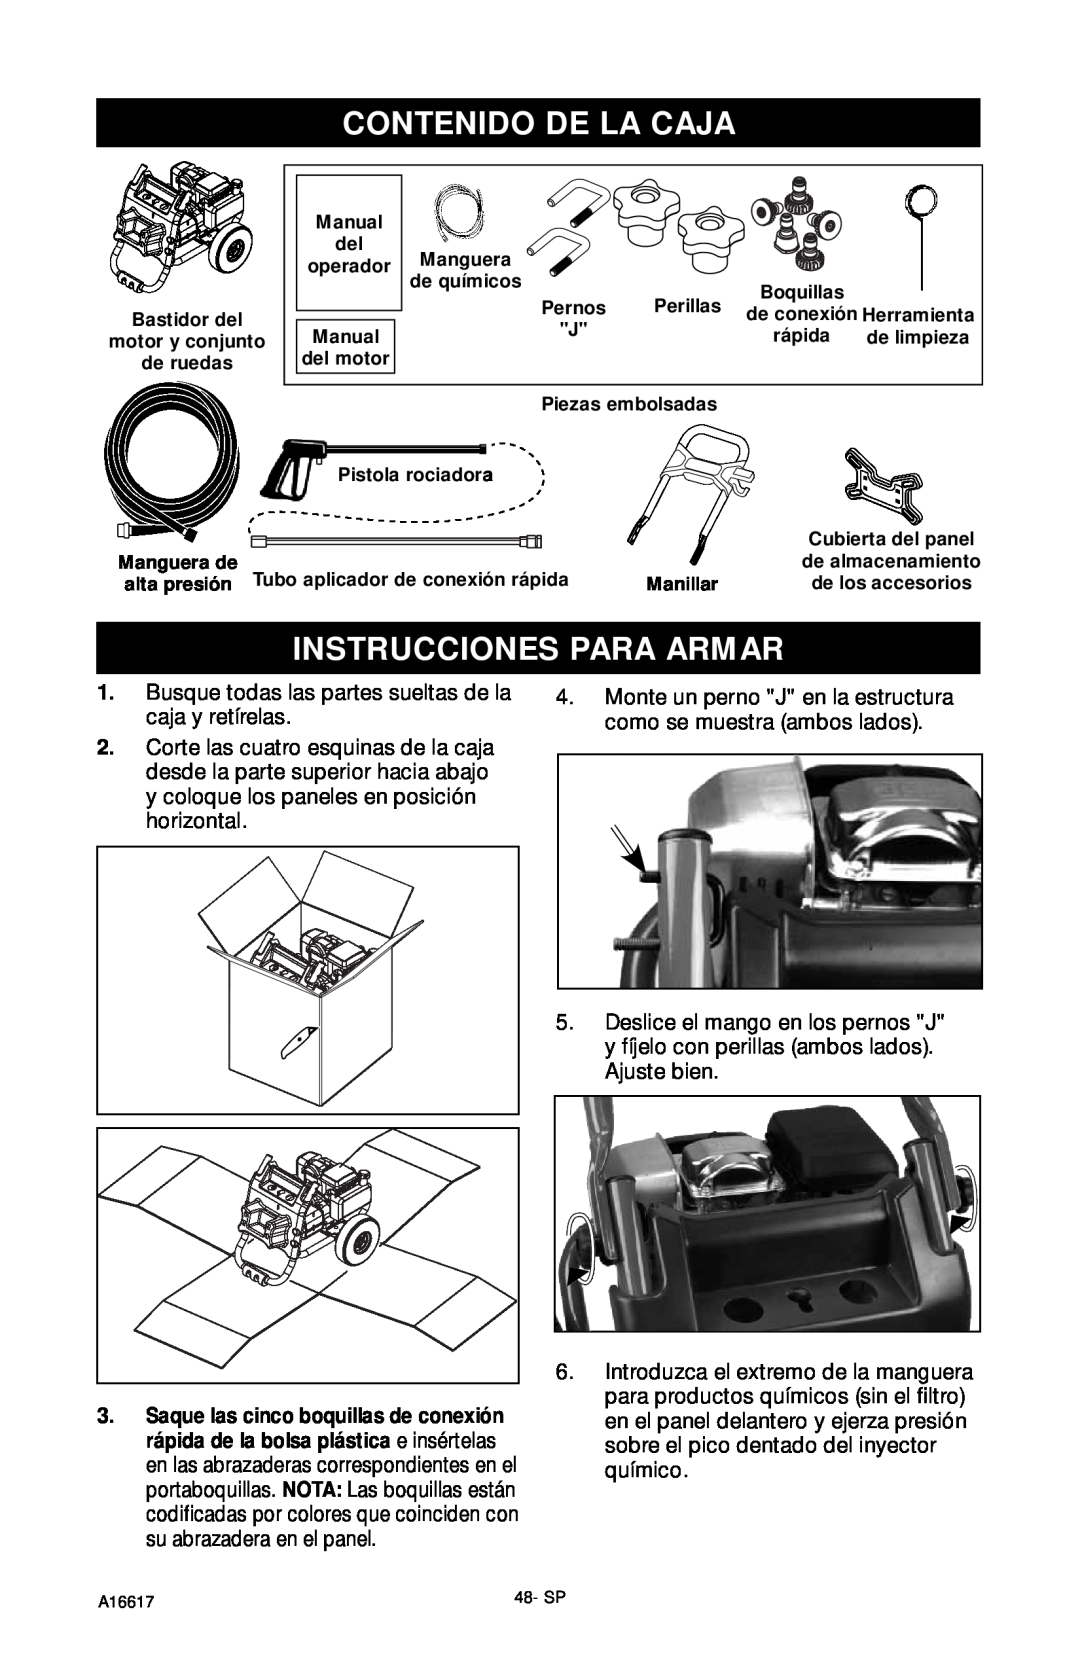 DeVillbiss Air Power Company XR2625, A16617 operation manual Contenido De La Caja, Instrucciones Para Armar 